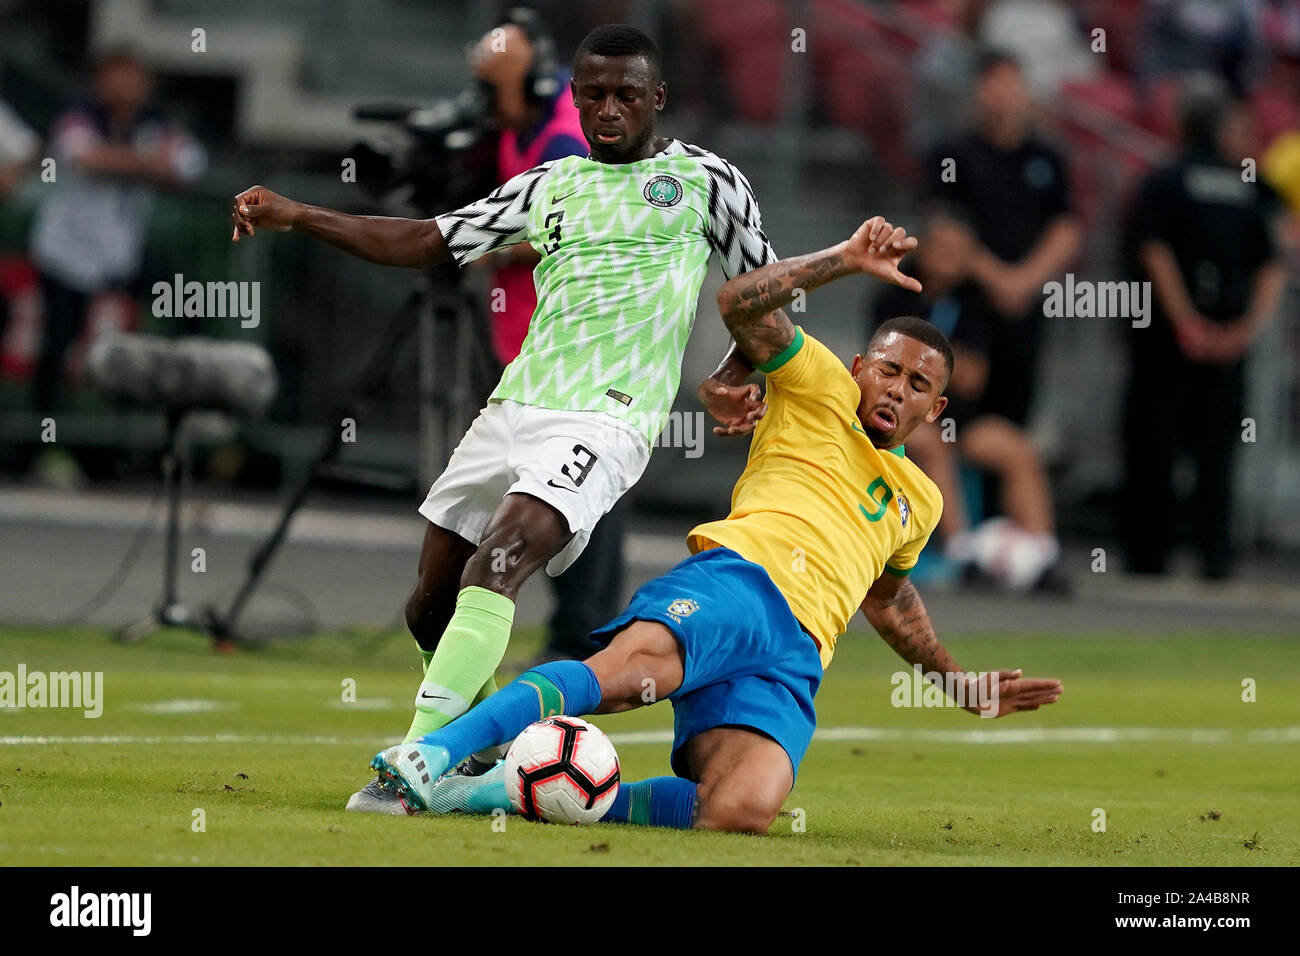 Home of Nigerian Football on X: Chidozie Awaziem opens the